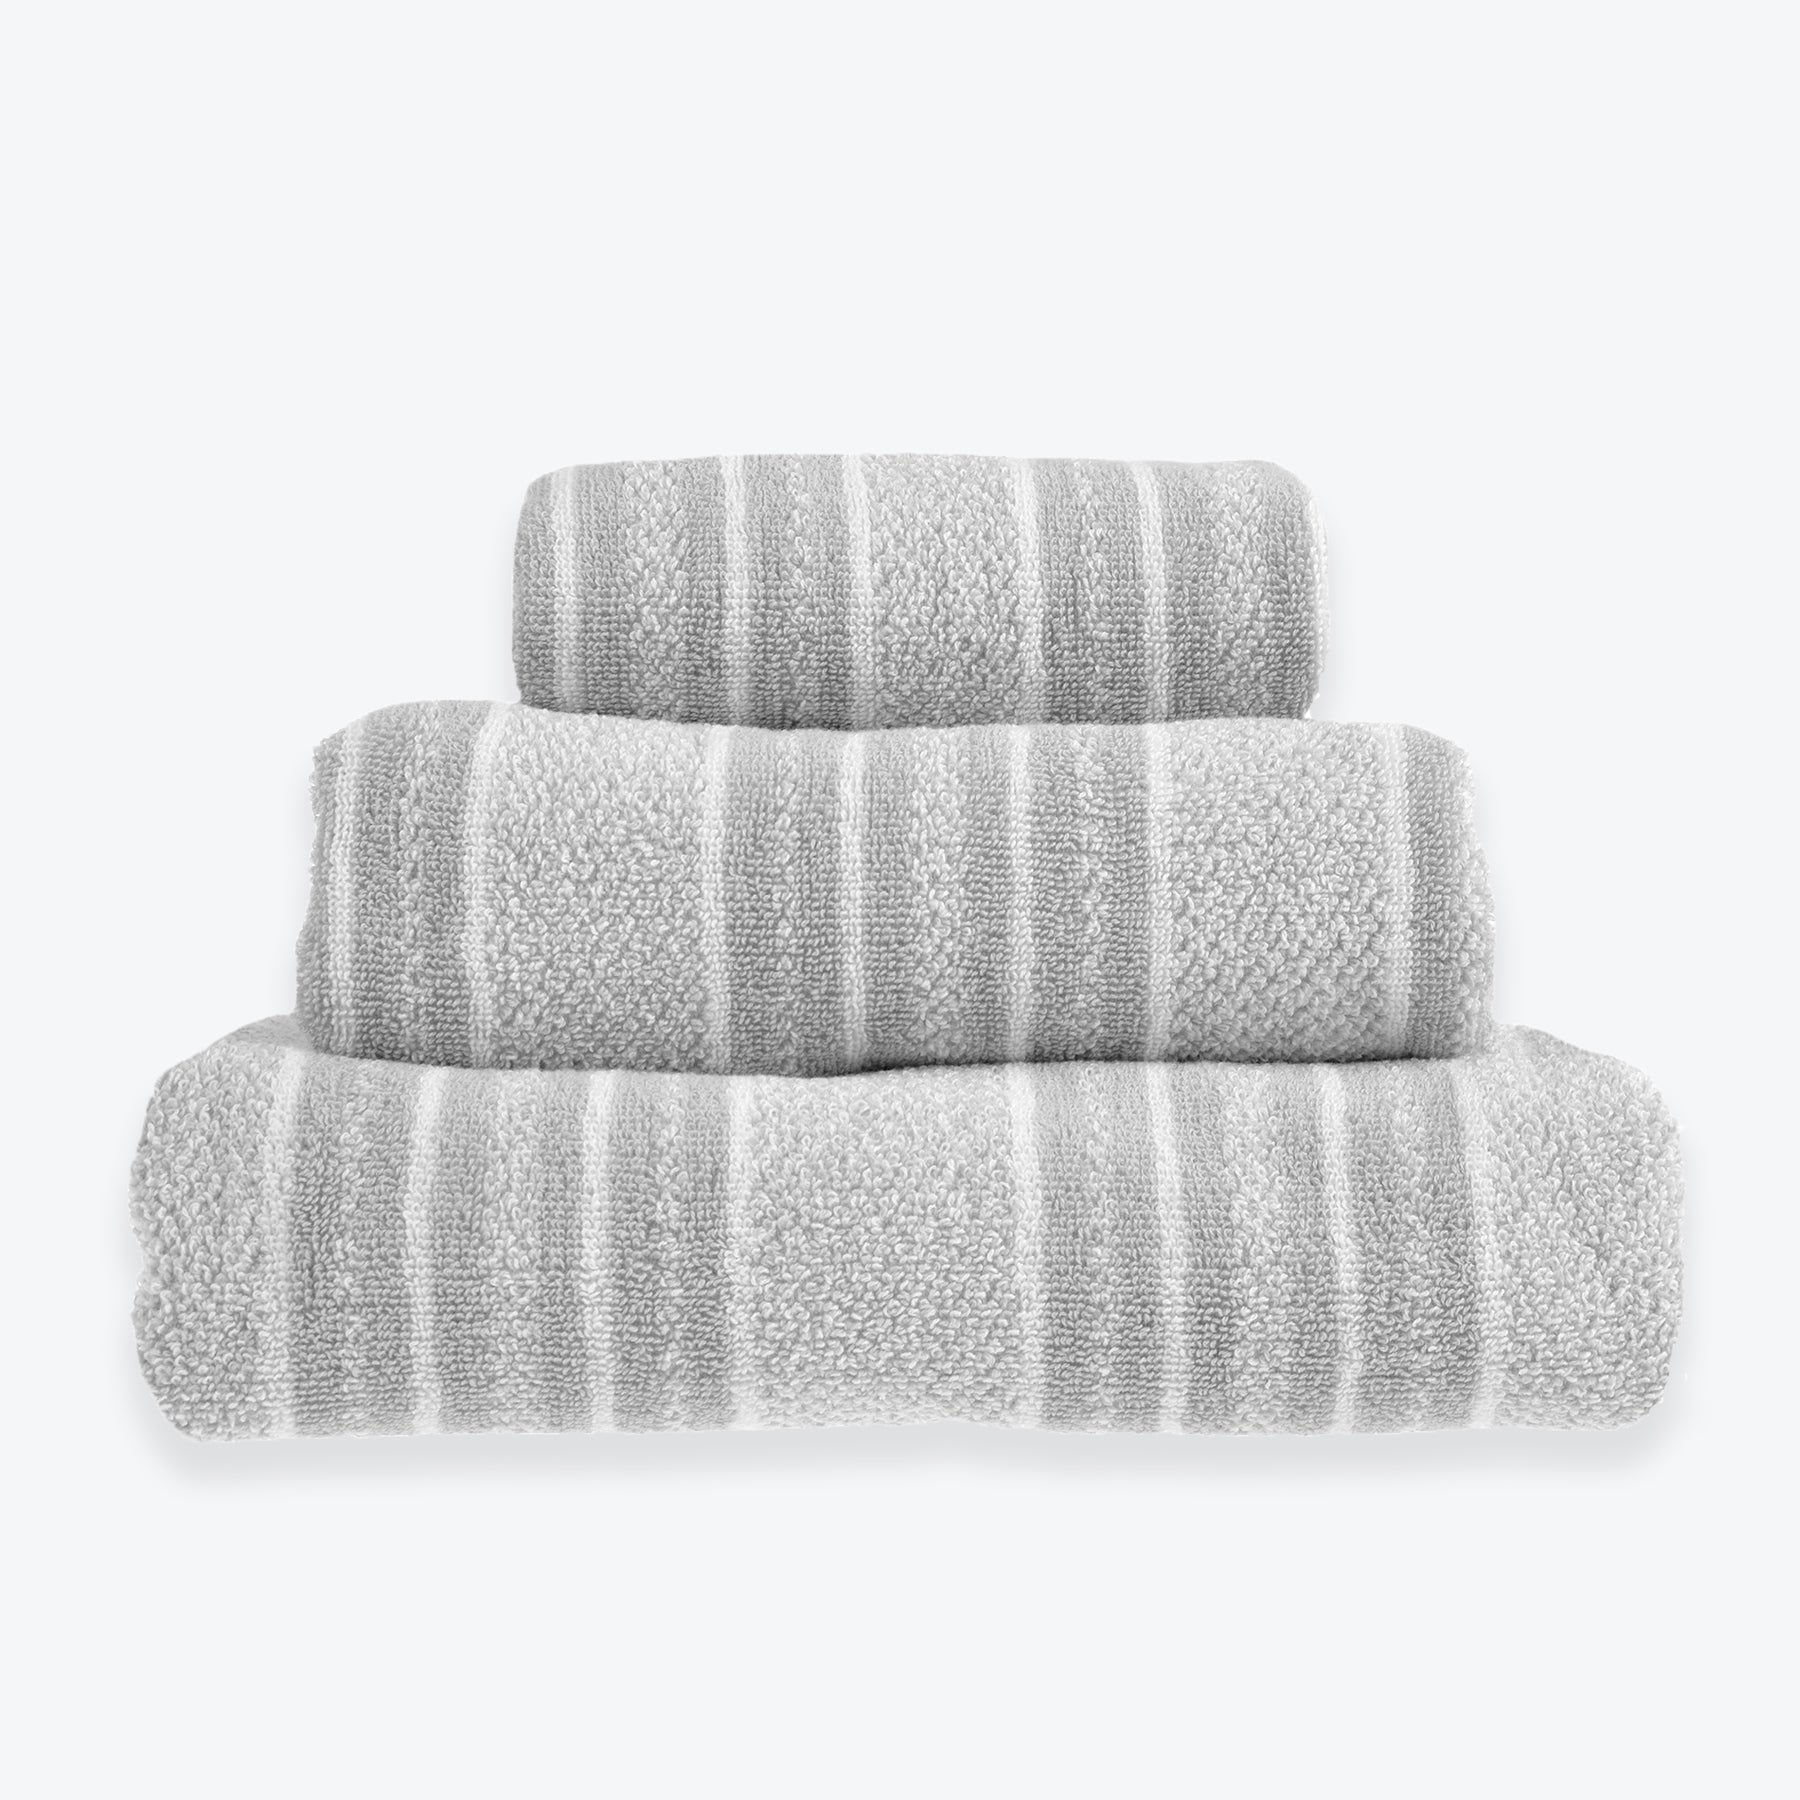 Patterned Bathroom Towels - Grey Striped Towels